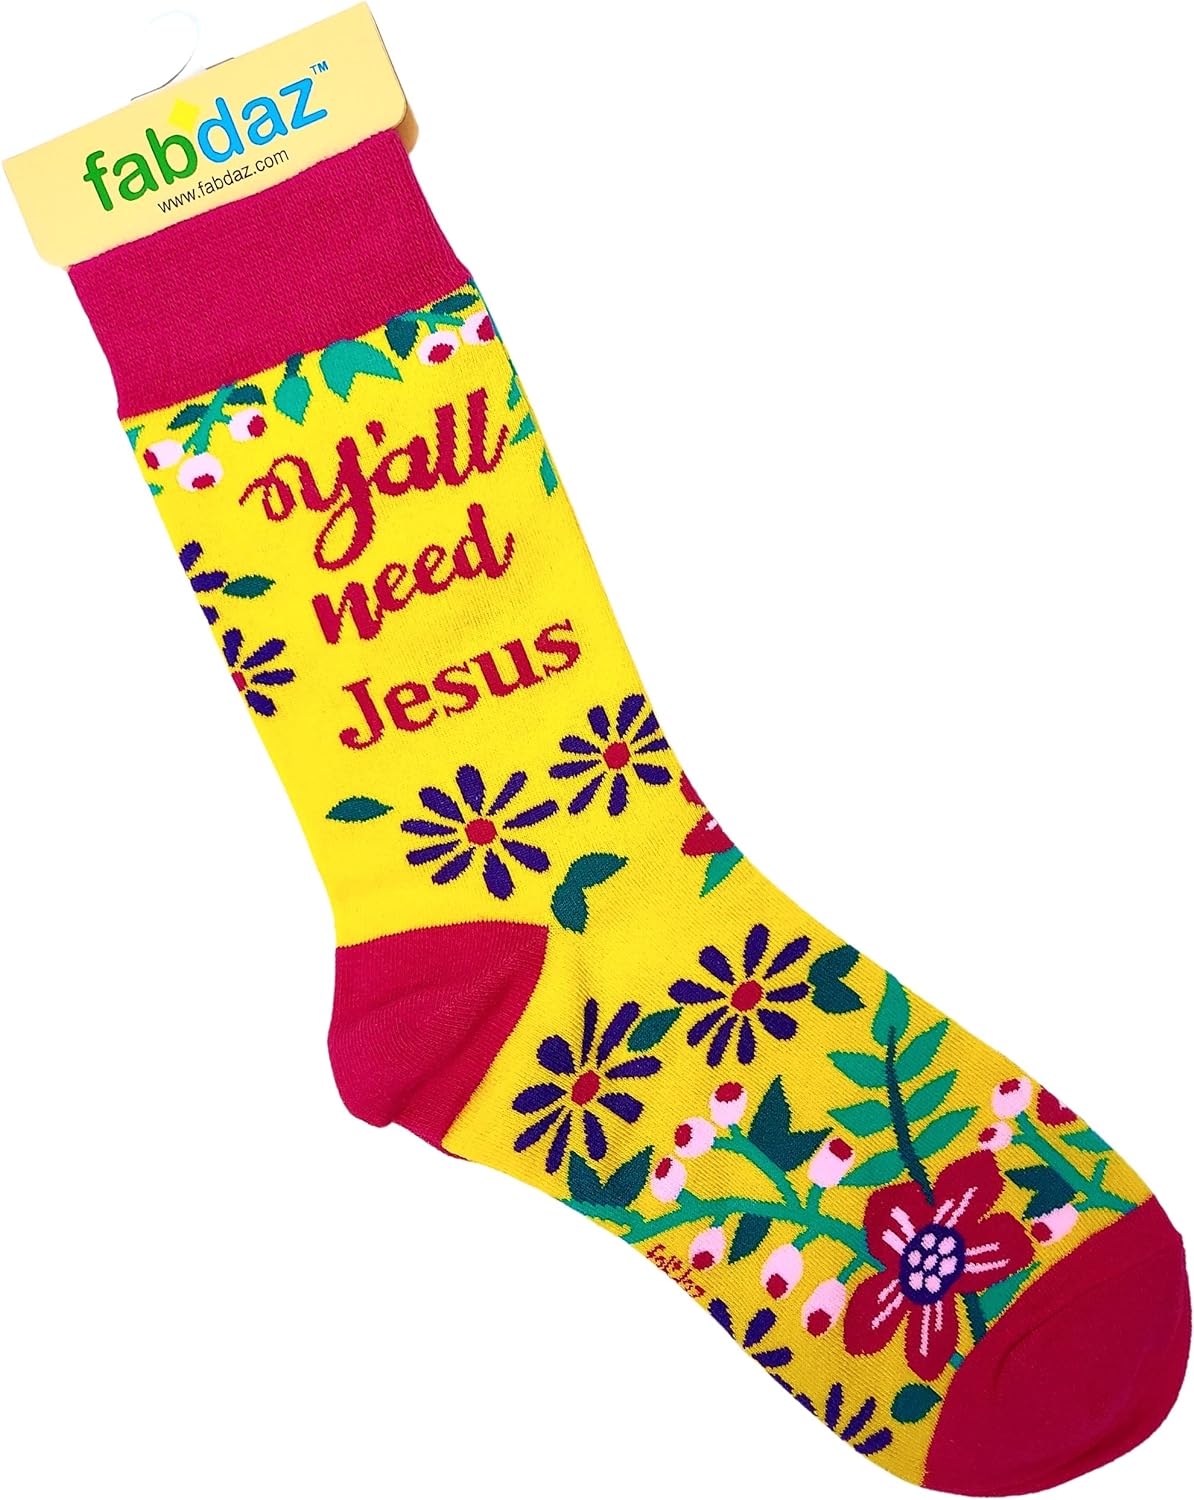 Y'all Need Jesus Funny Christian Socks Christian Gift Idea claimedbygoddesigns